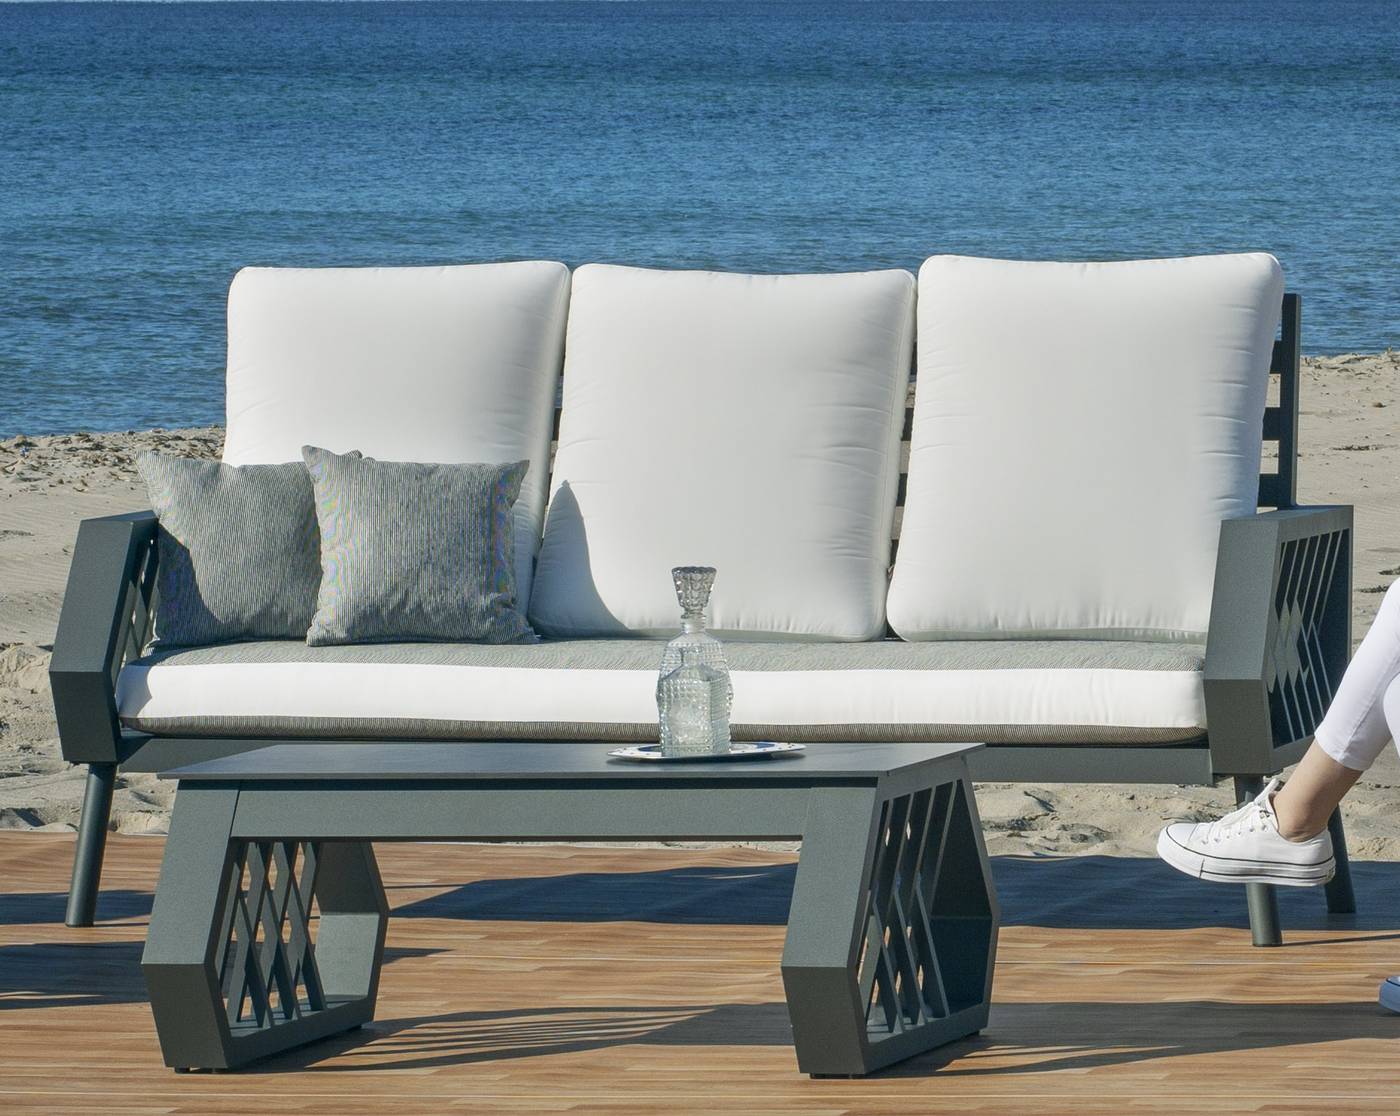 Set Aluminio Luxe Milano-8 - Conjunto robusto y lujoso de aluminio: 1 sofá de 3 plazas + 2 sillones + 1 mesa de centro.